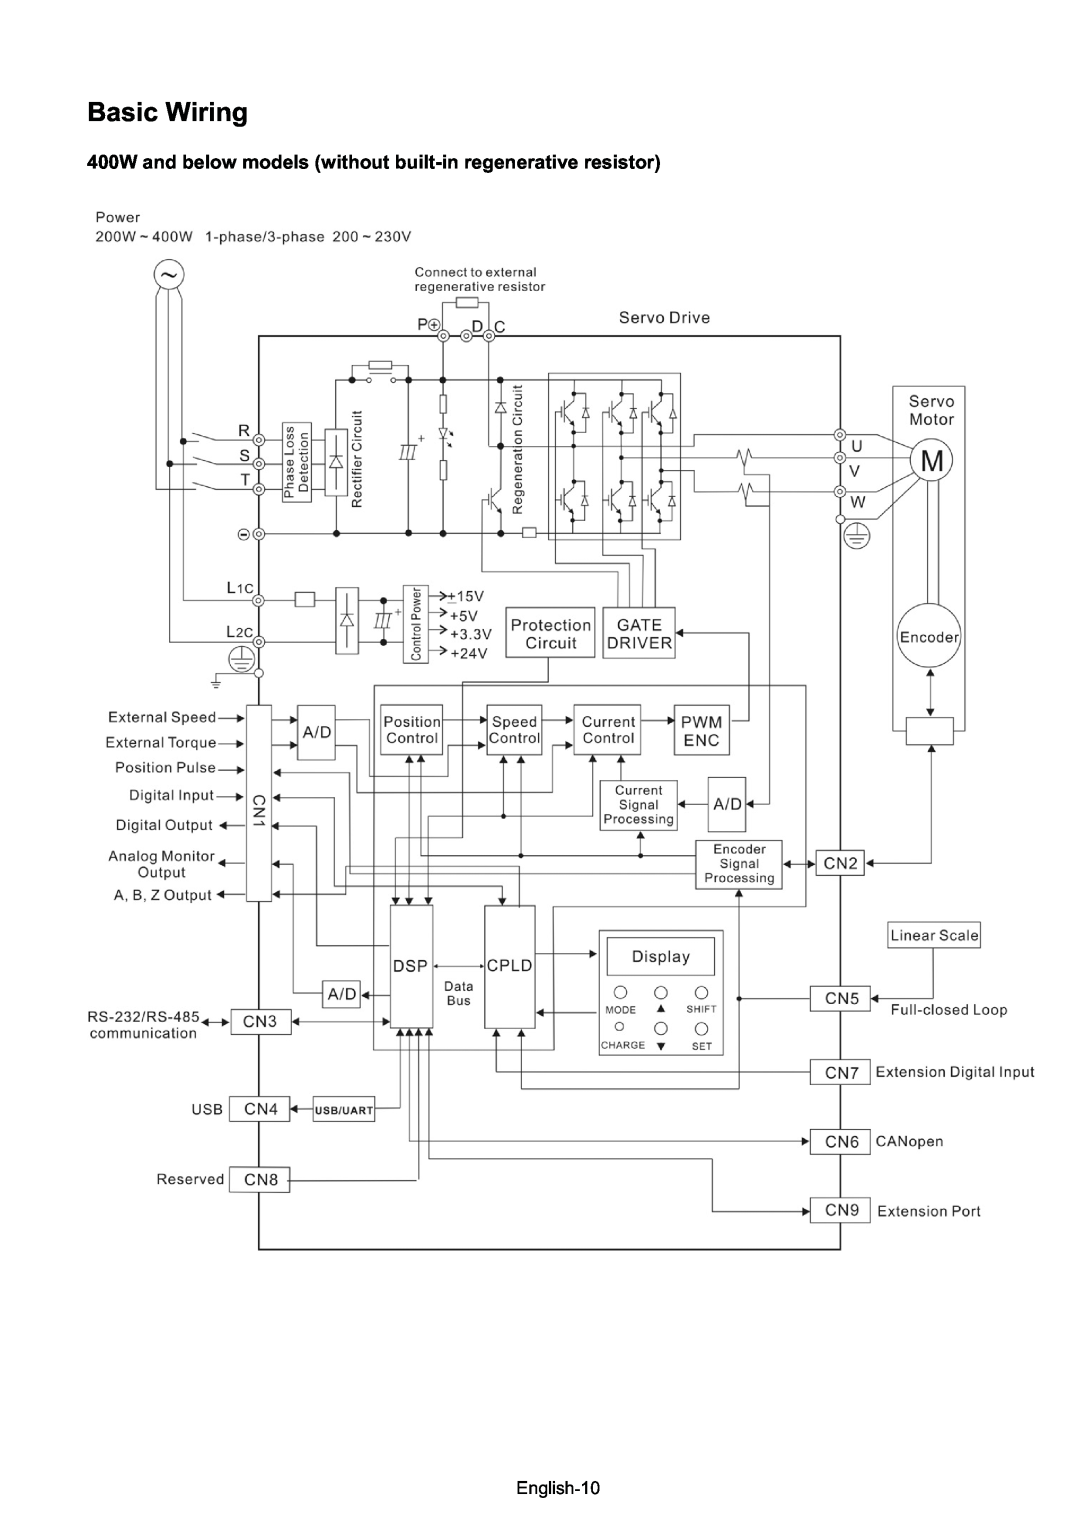 888 Digital ASDA-A2 manual Basic Wiring, English-10 